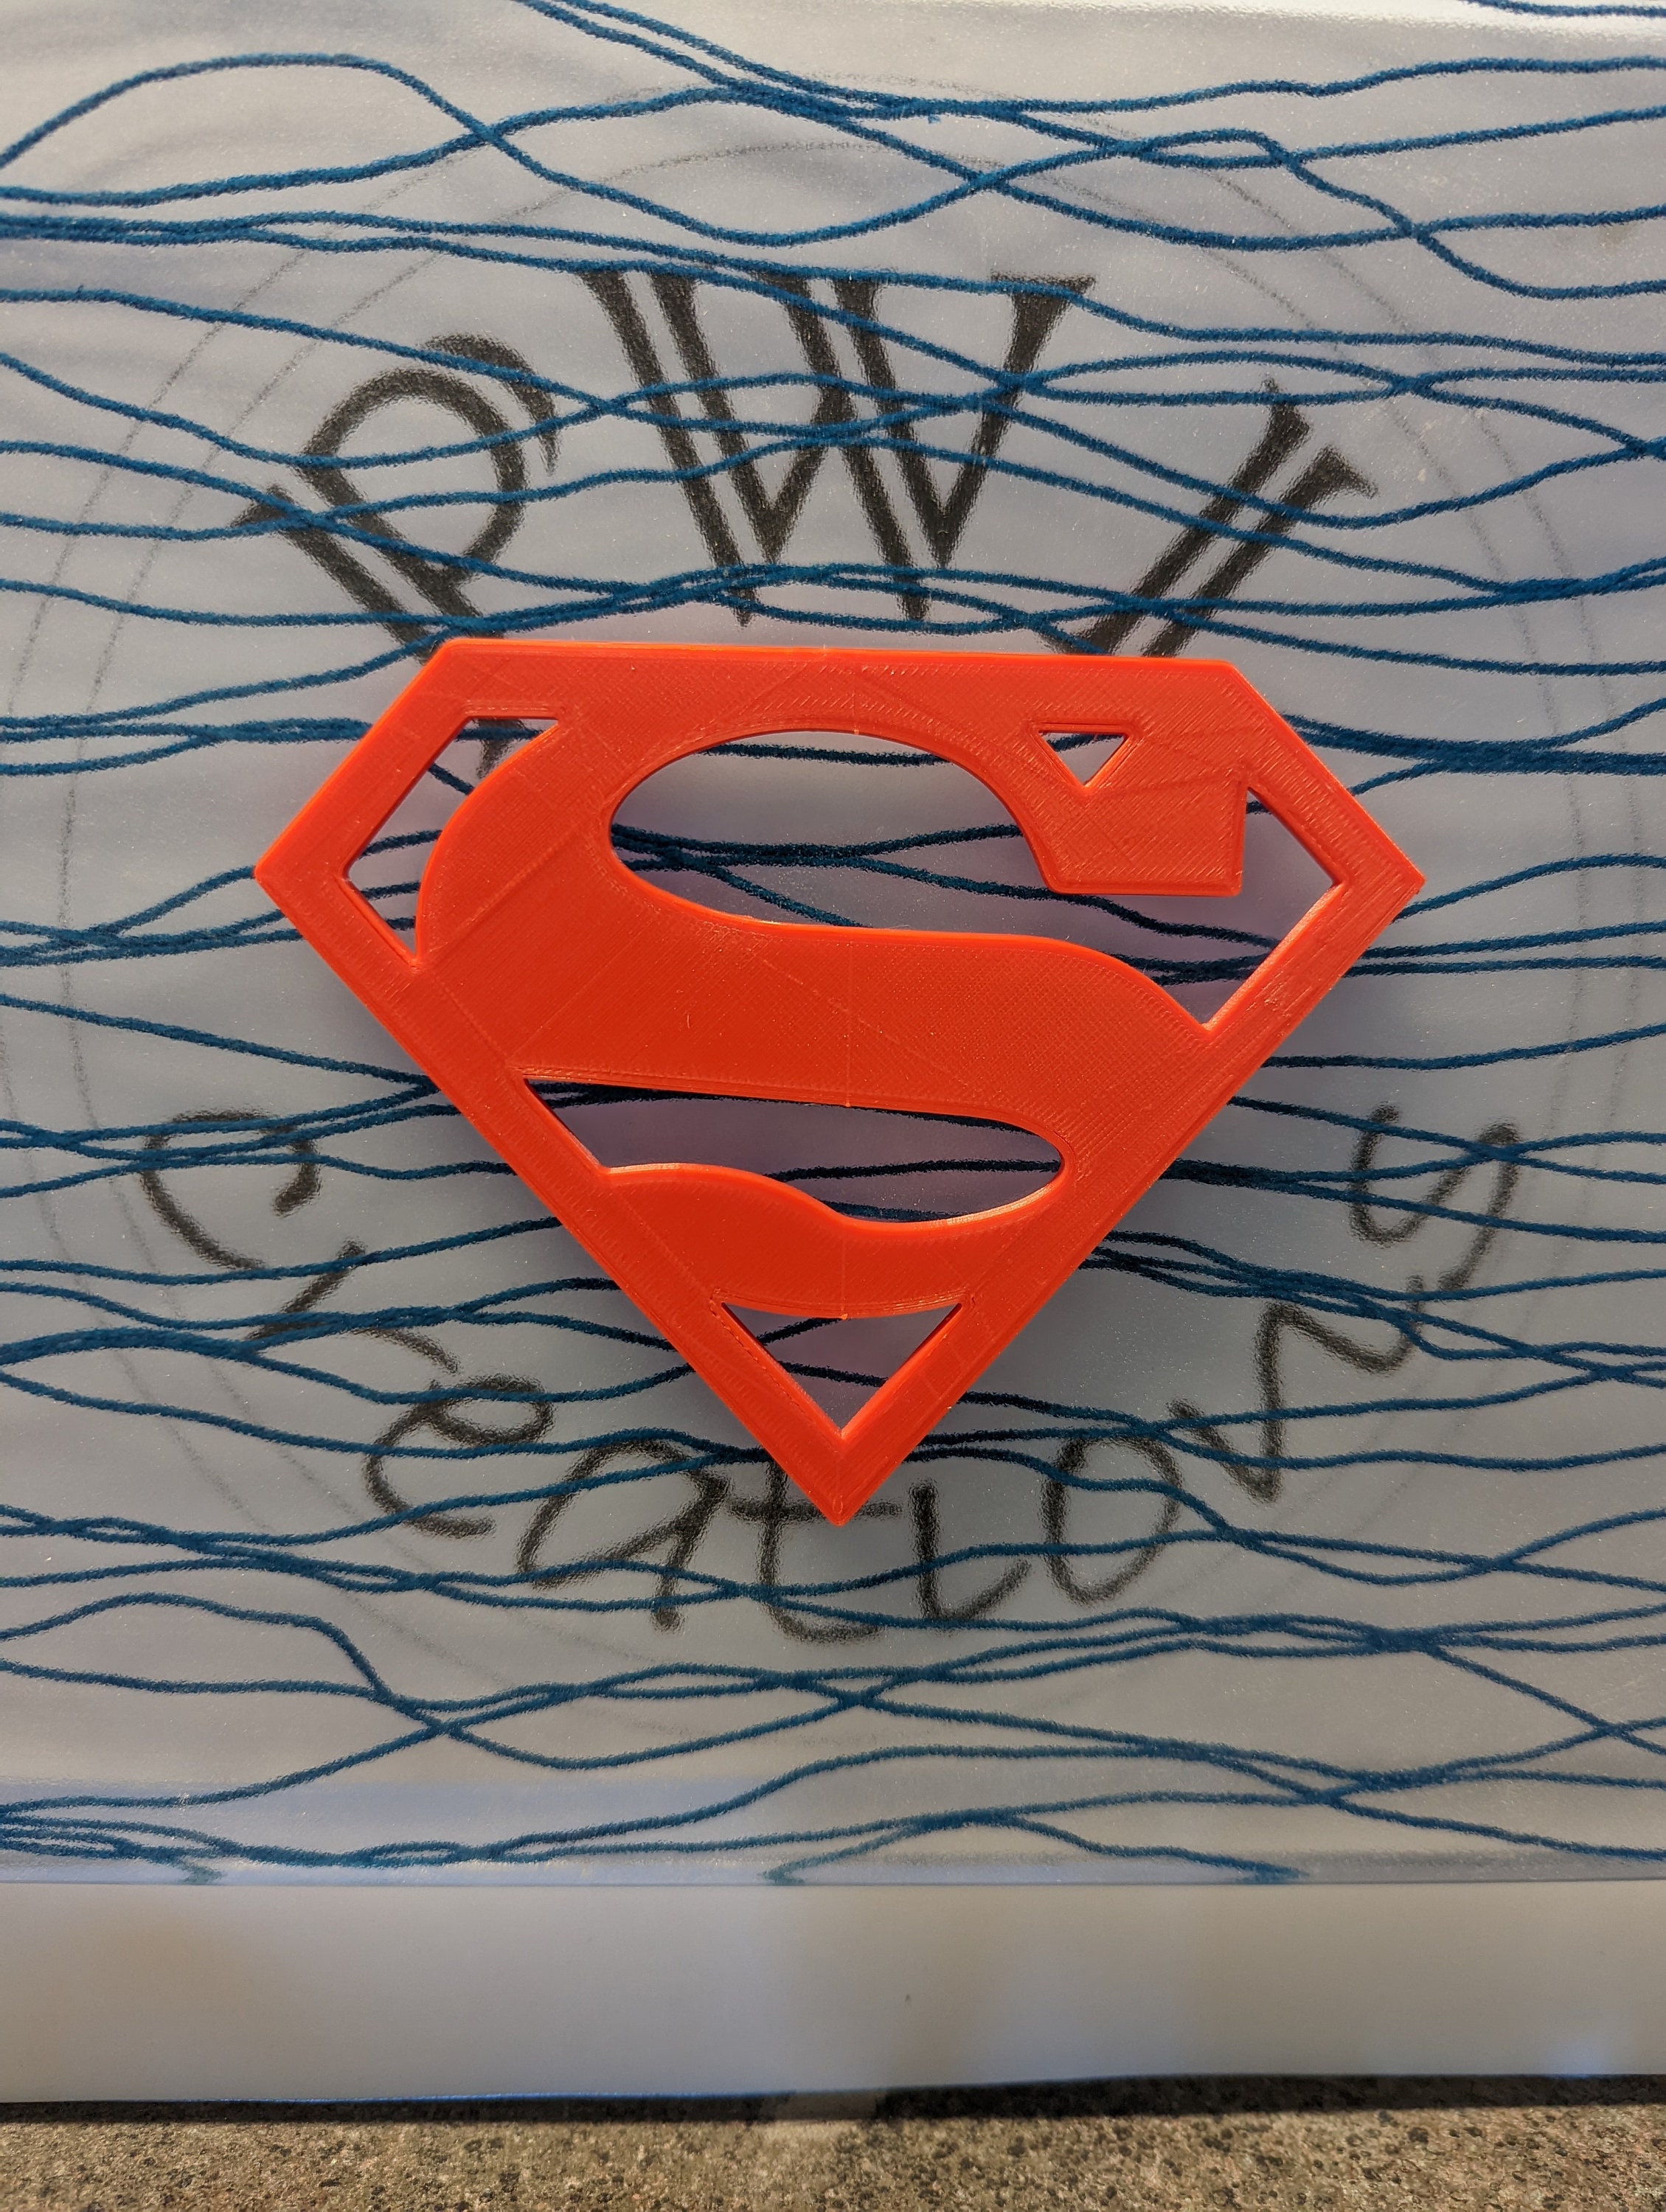 Comics Superman Rain Superhero Superman Logo Custom Mat USA SHIP